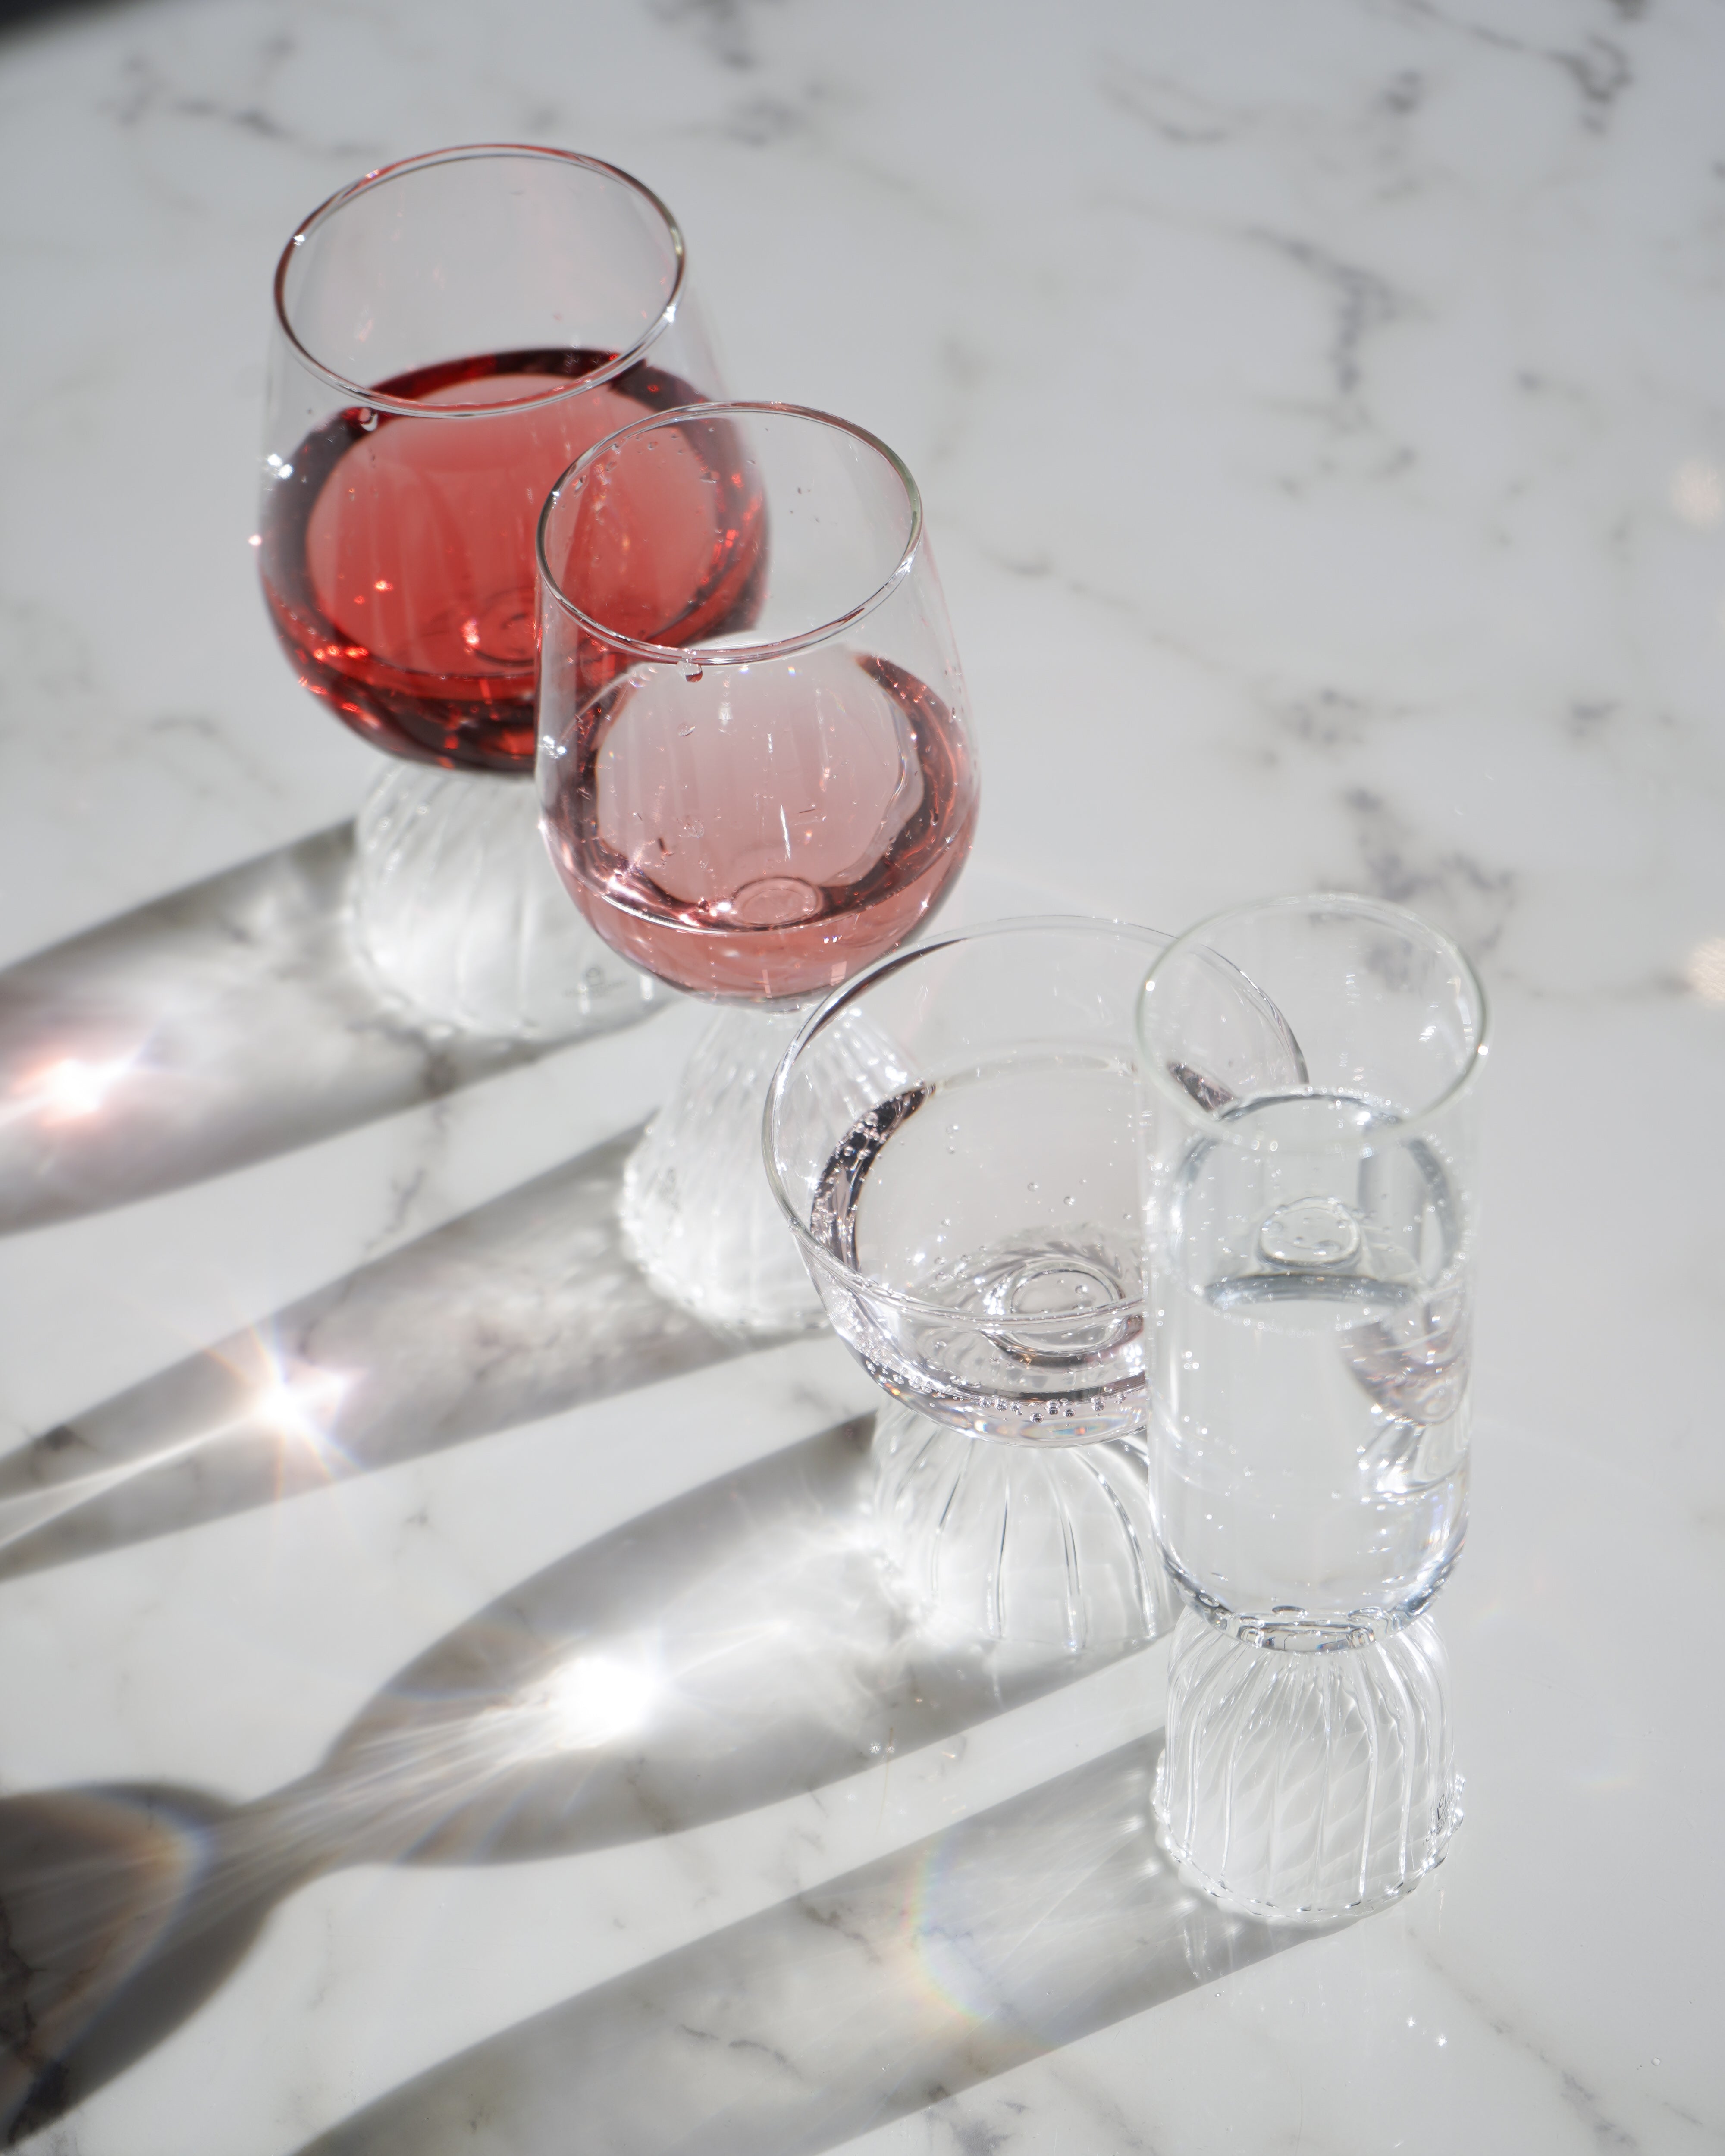 Ichendorf Milano, Parigi Wine Glass – Nickey Kehoe Inc.